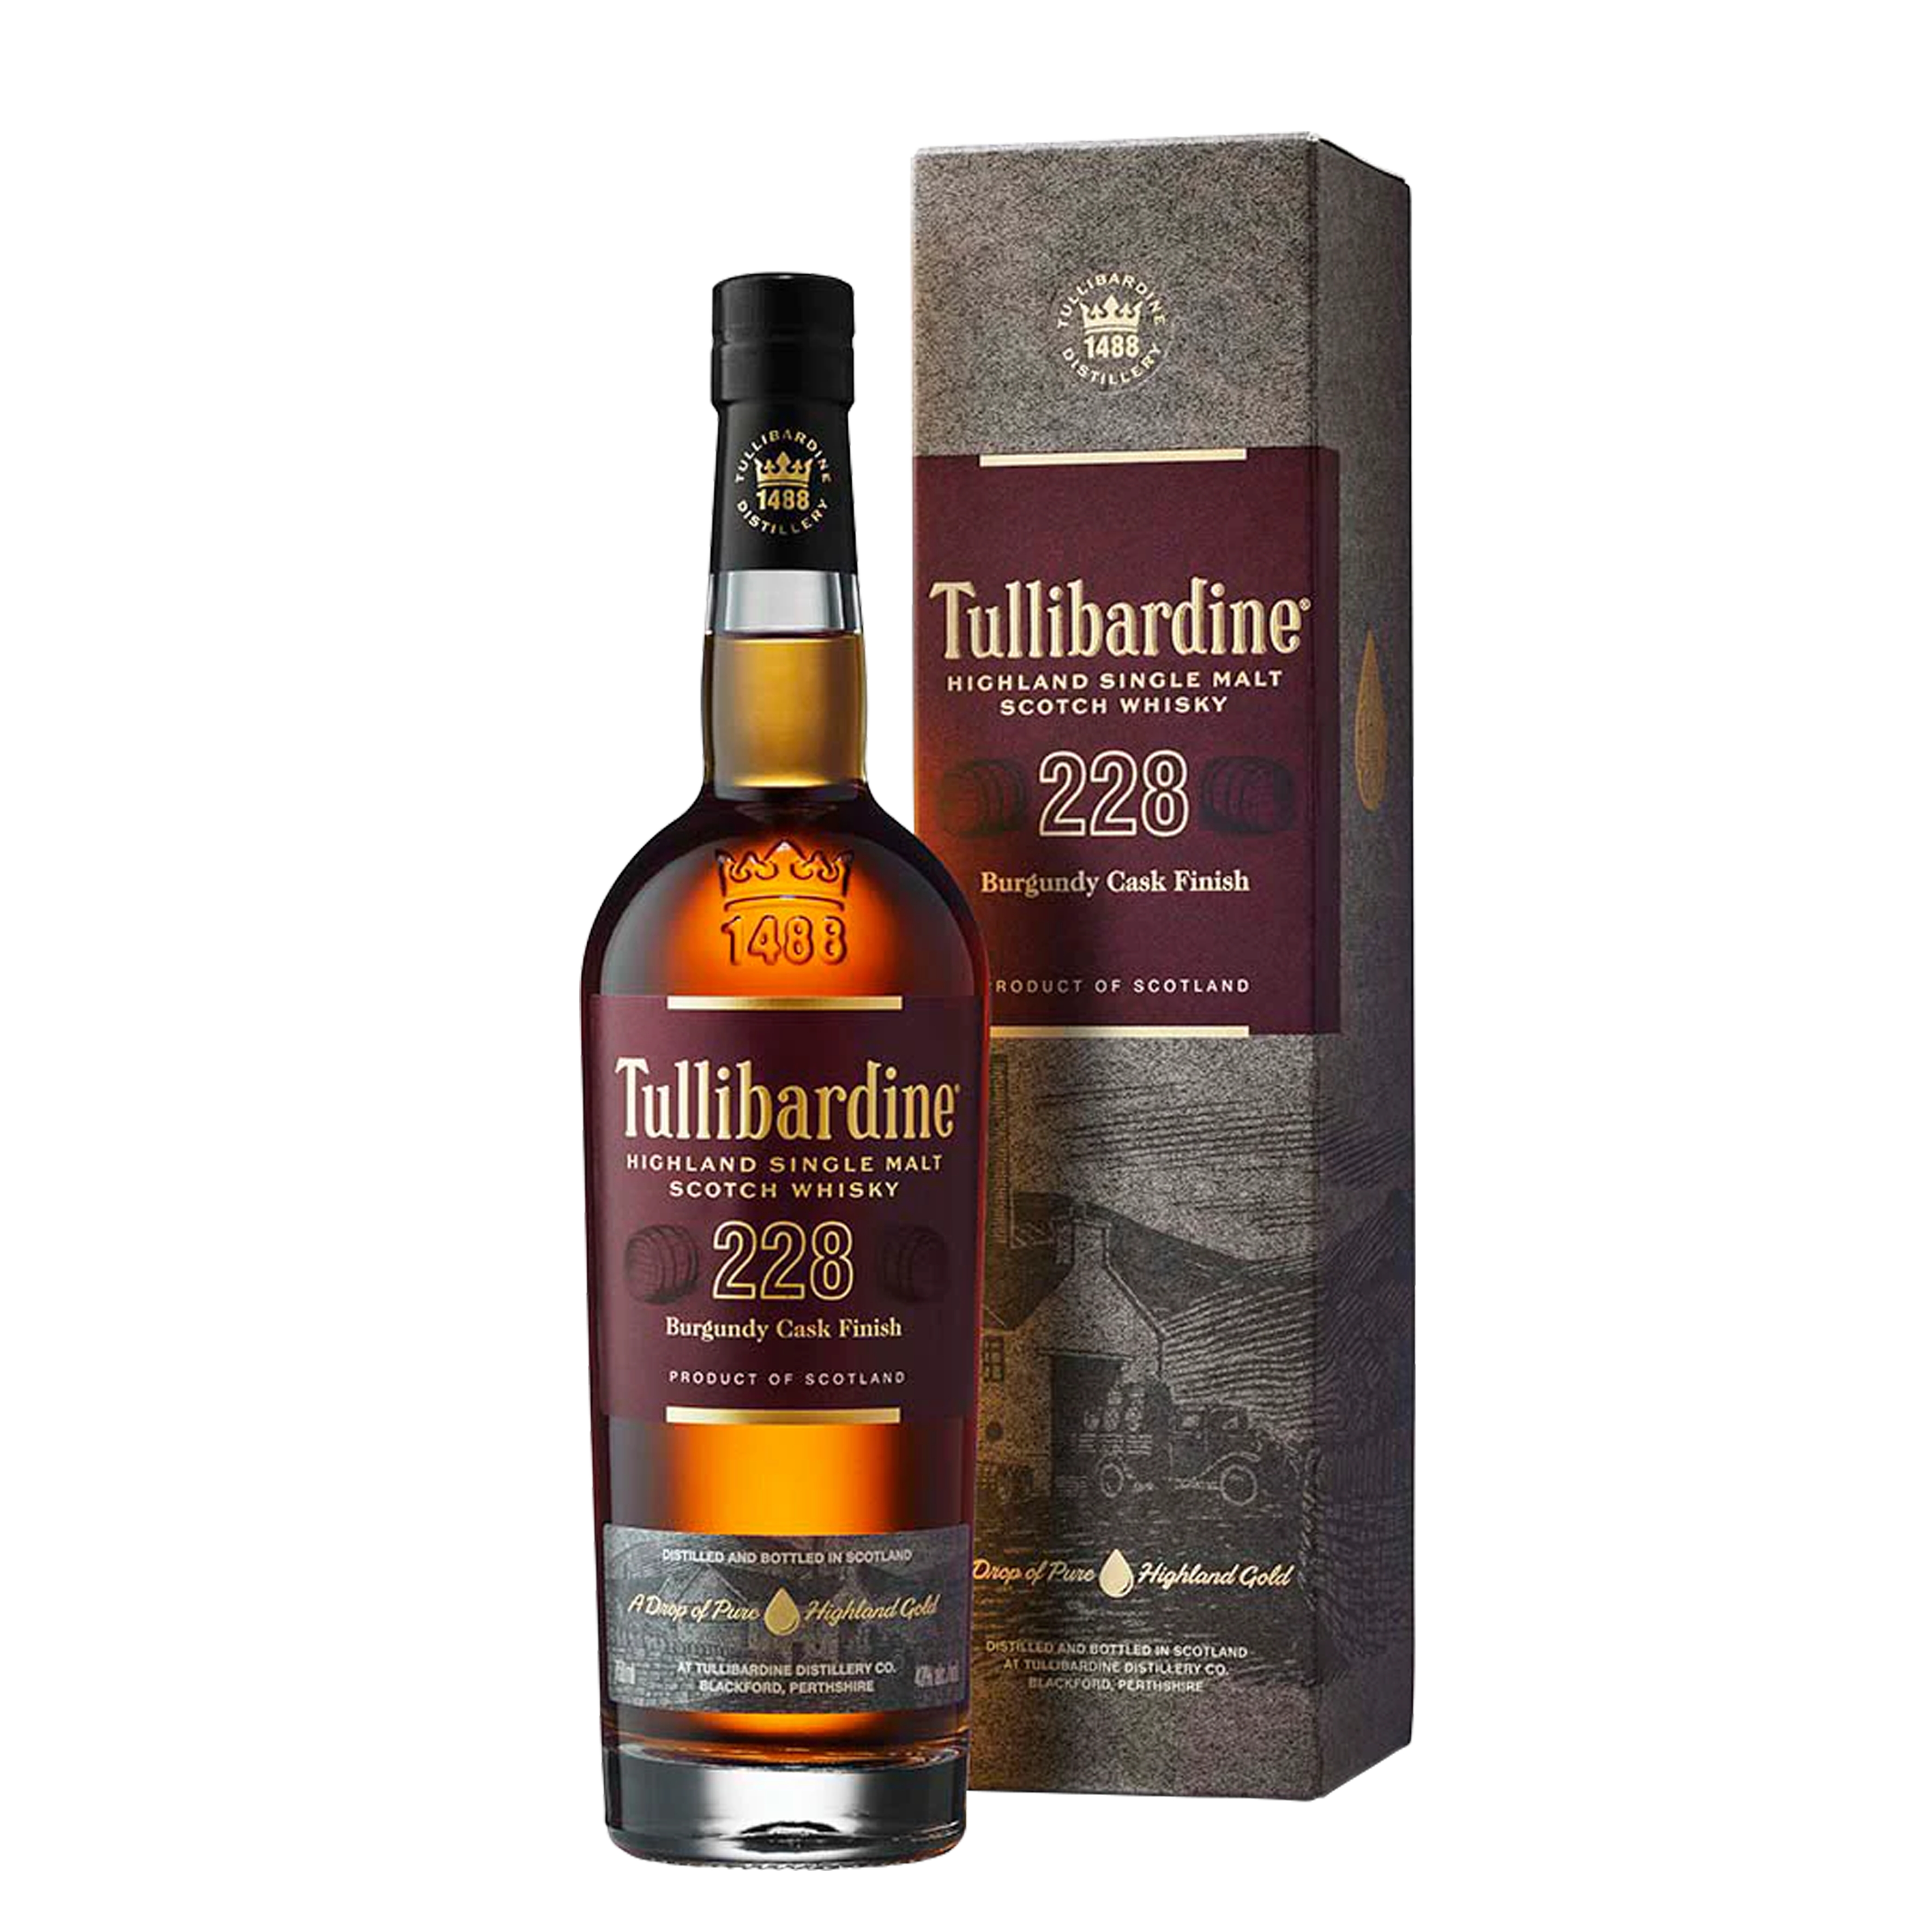 Tullibardine, whisky de barril de Borgoña 228